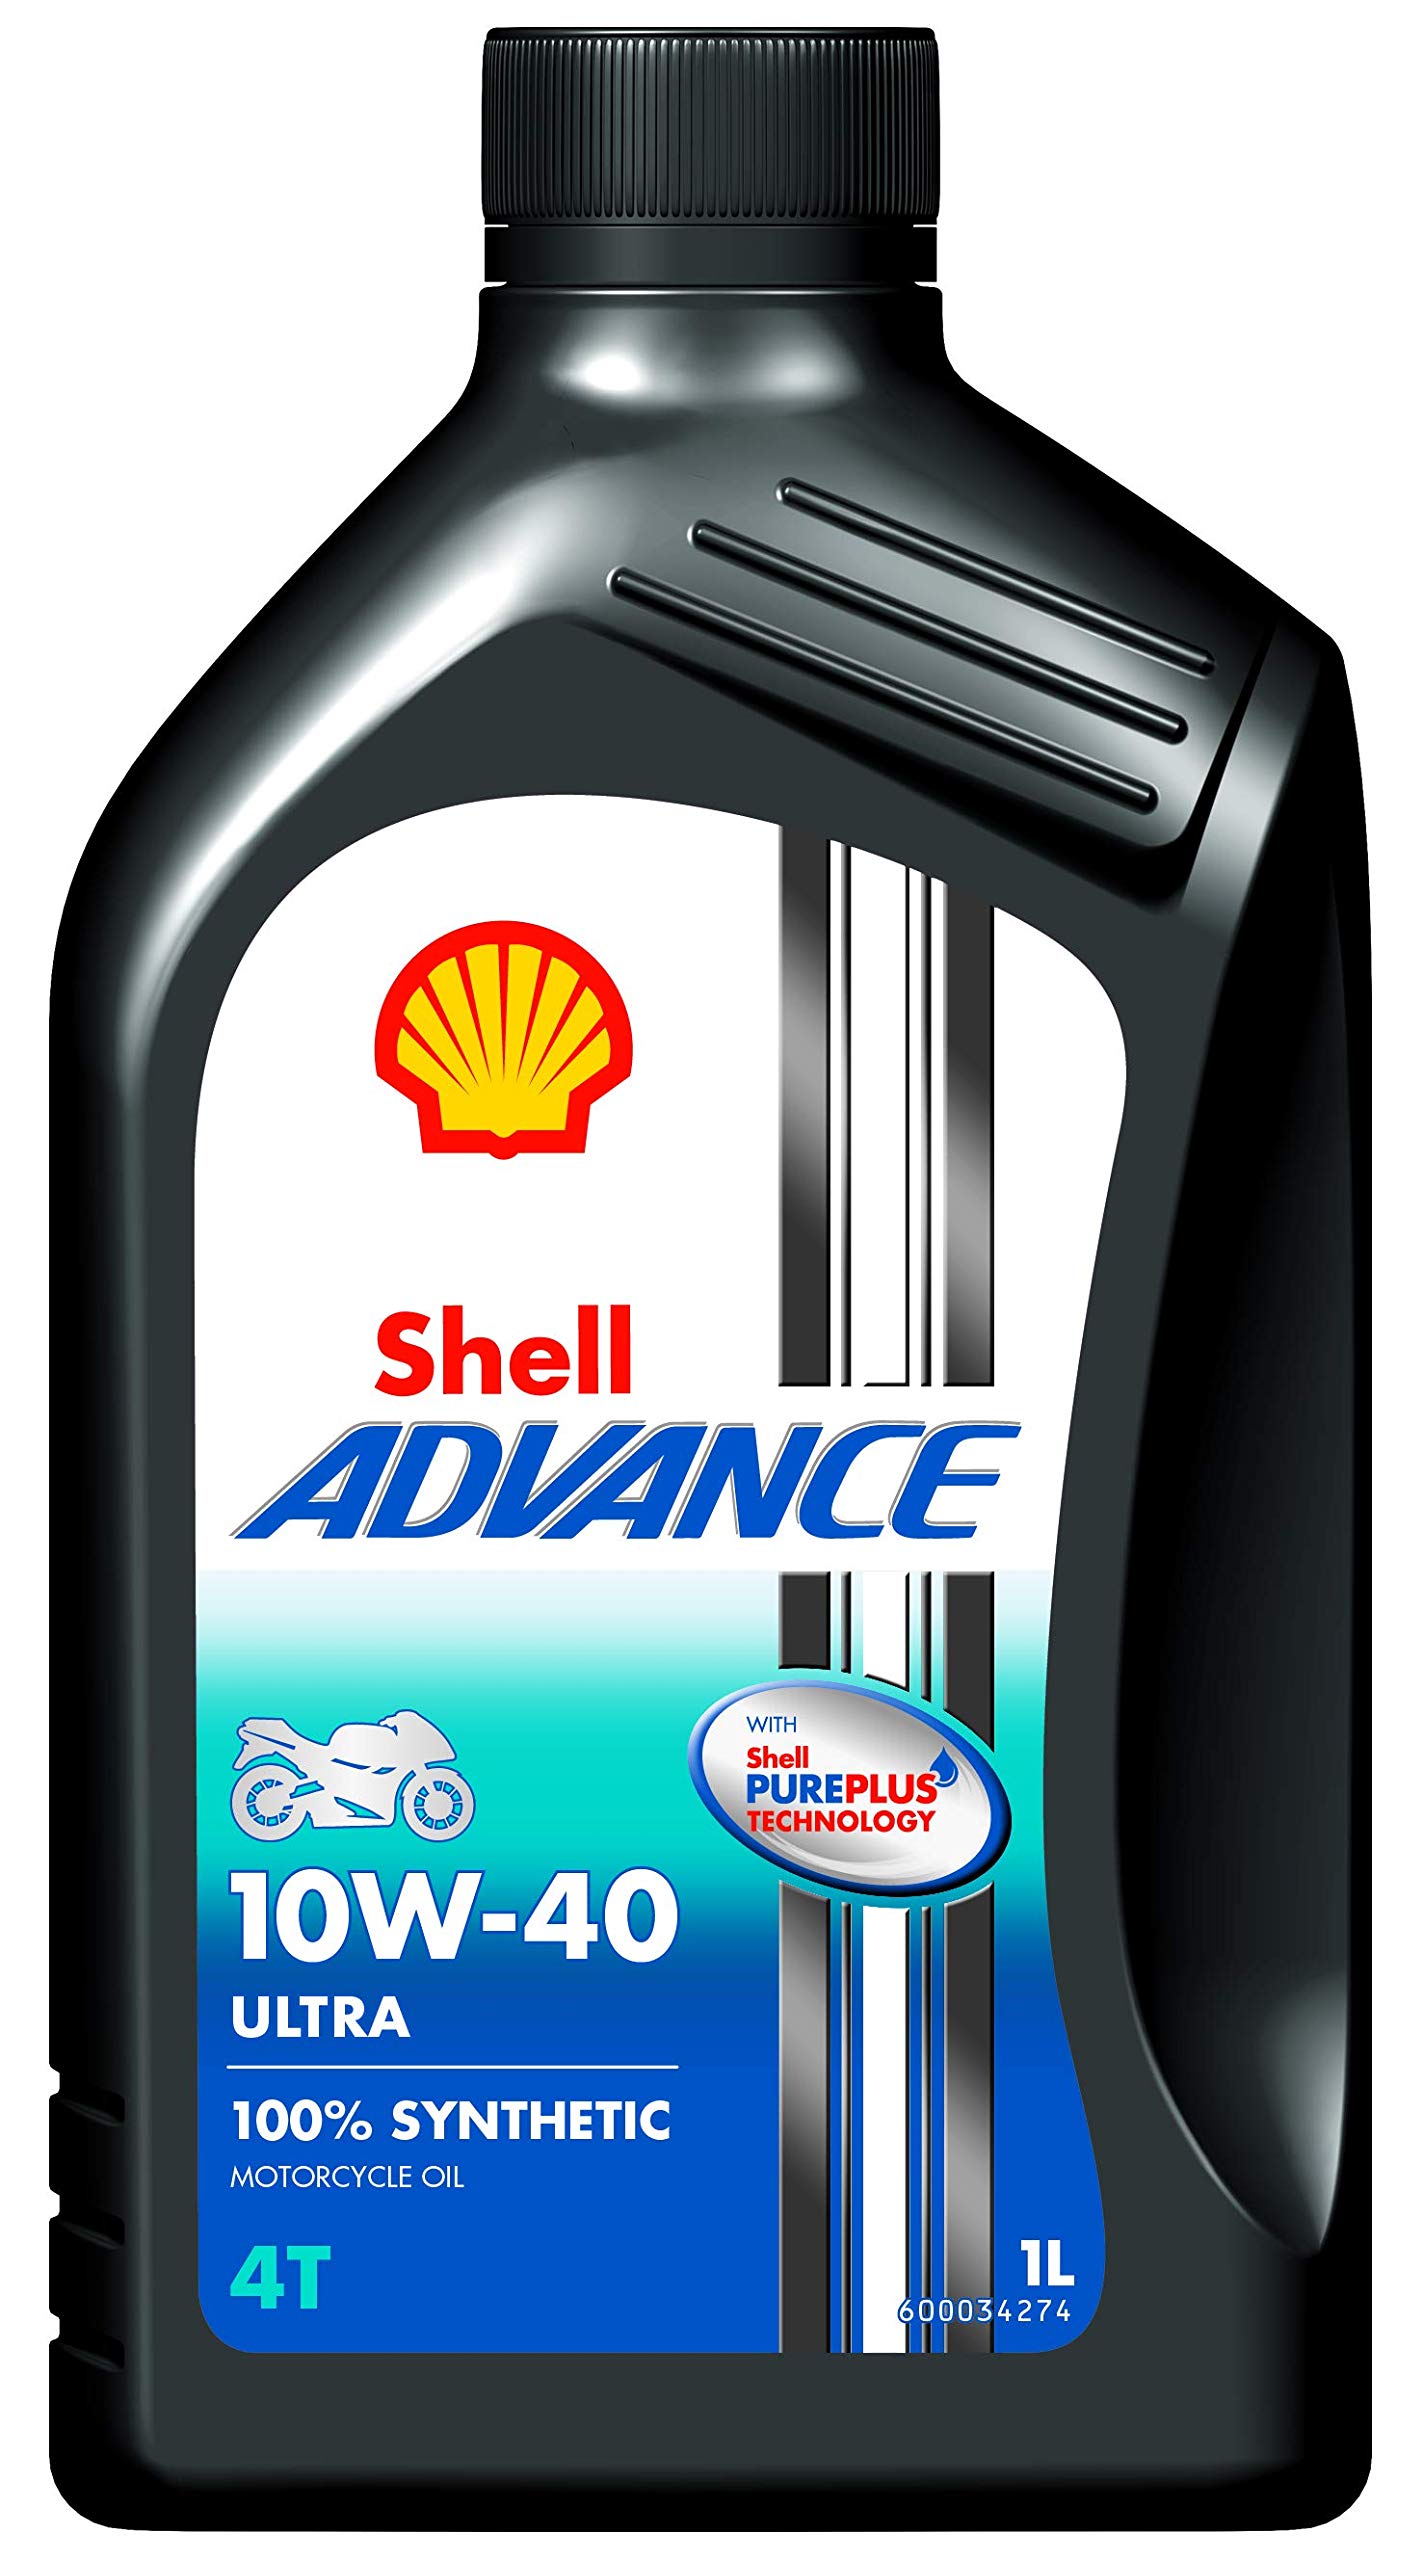 Royal Dutch Shell Schmiermittel 550044447 Shell Advance 4T Ultra Synthetisches Motorrad Öl, 10 W / 40 von Shell